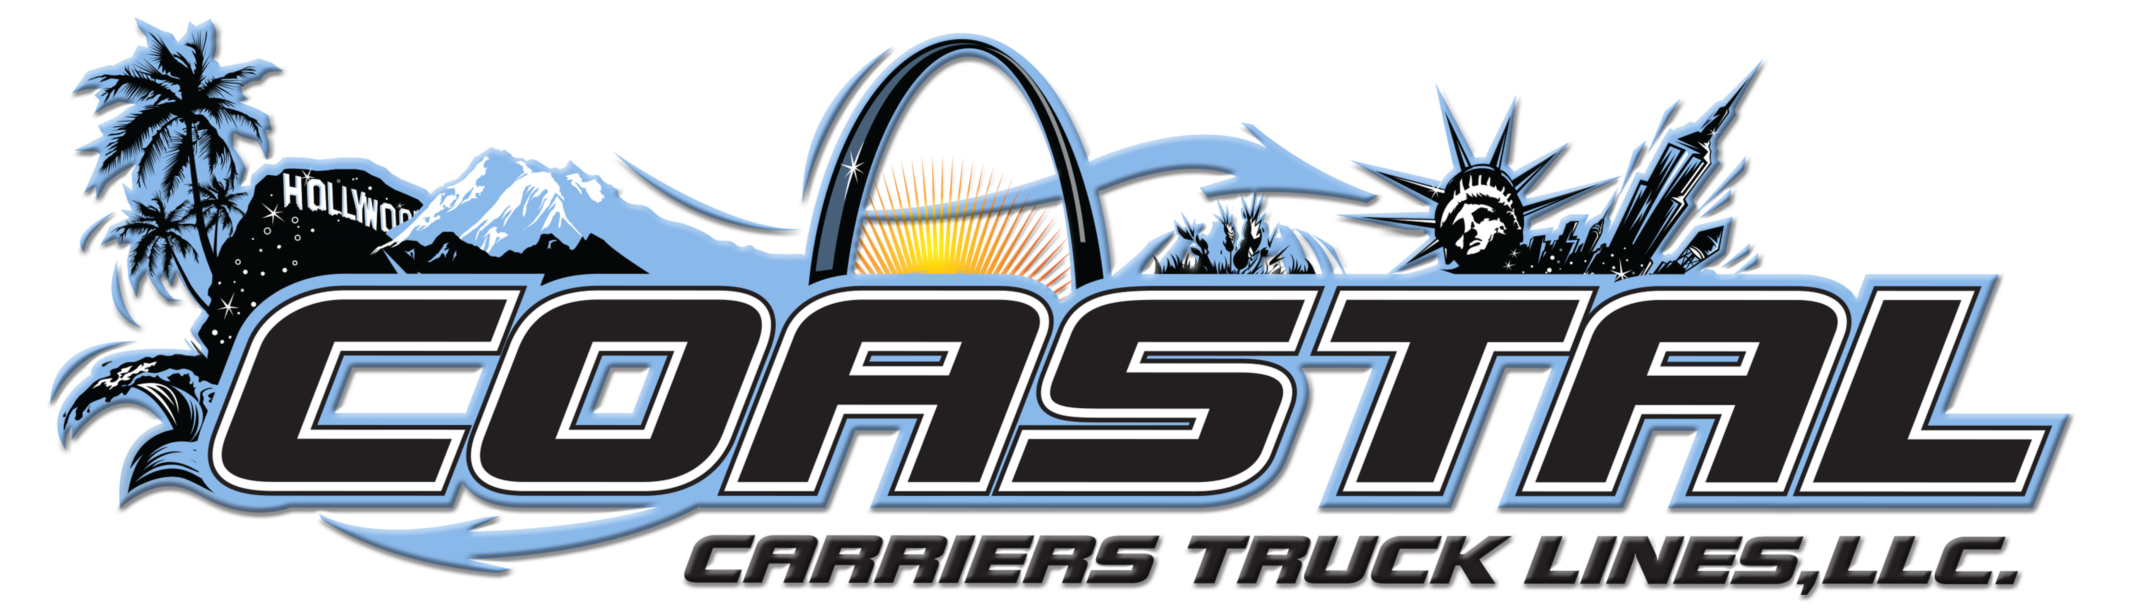 Coastal Carriers Truck Lines, LLC. Company Logo